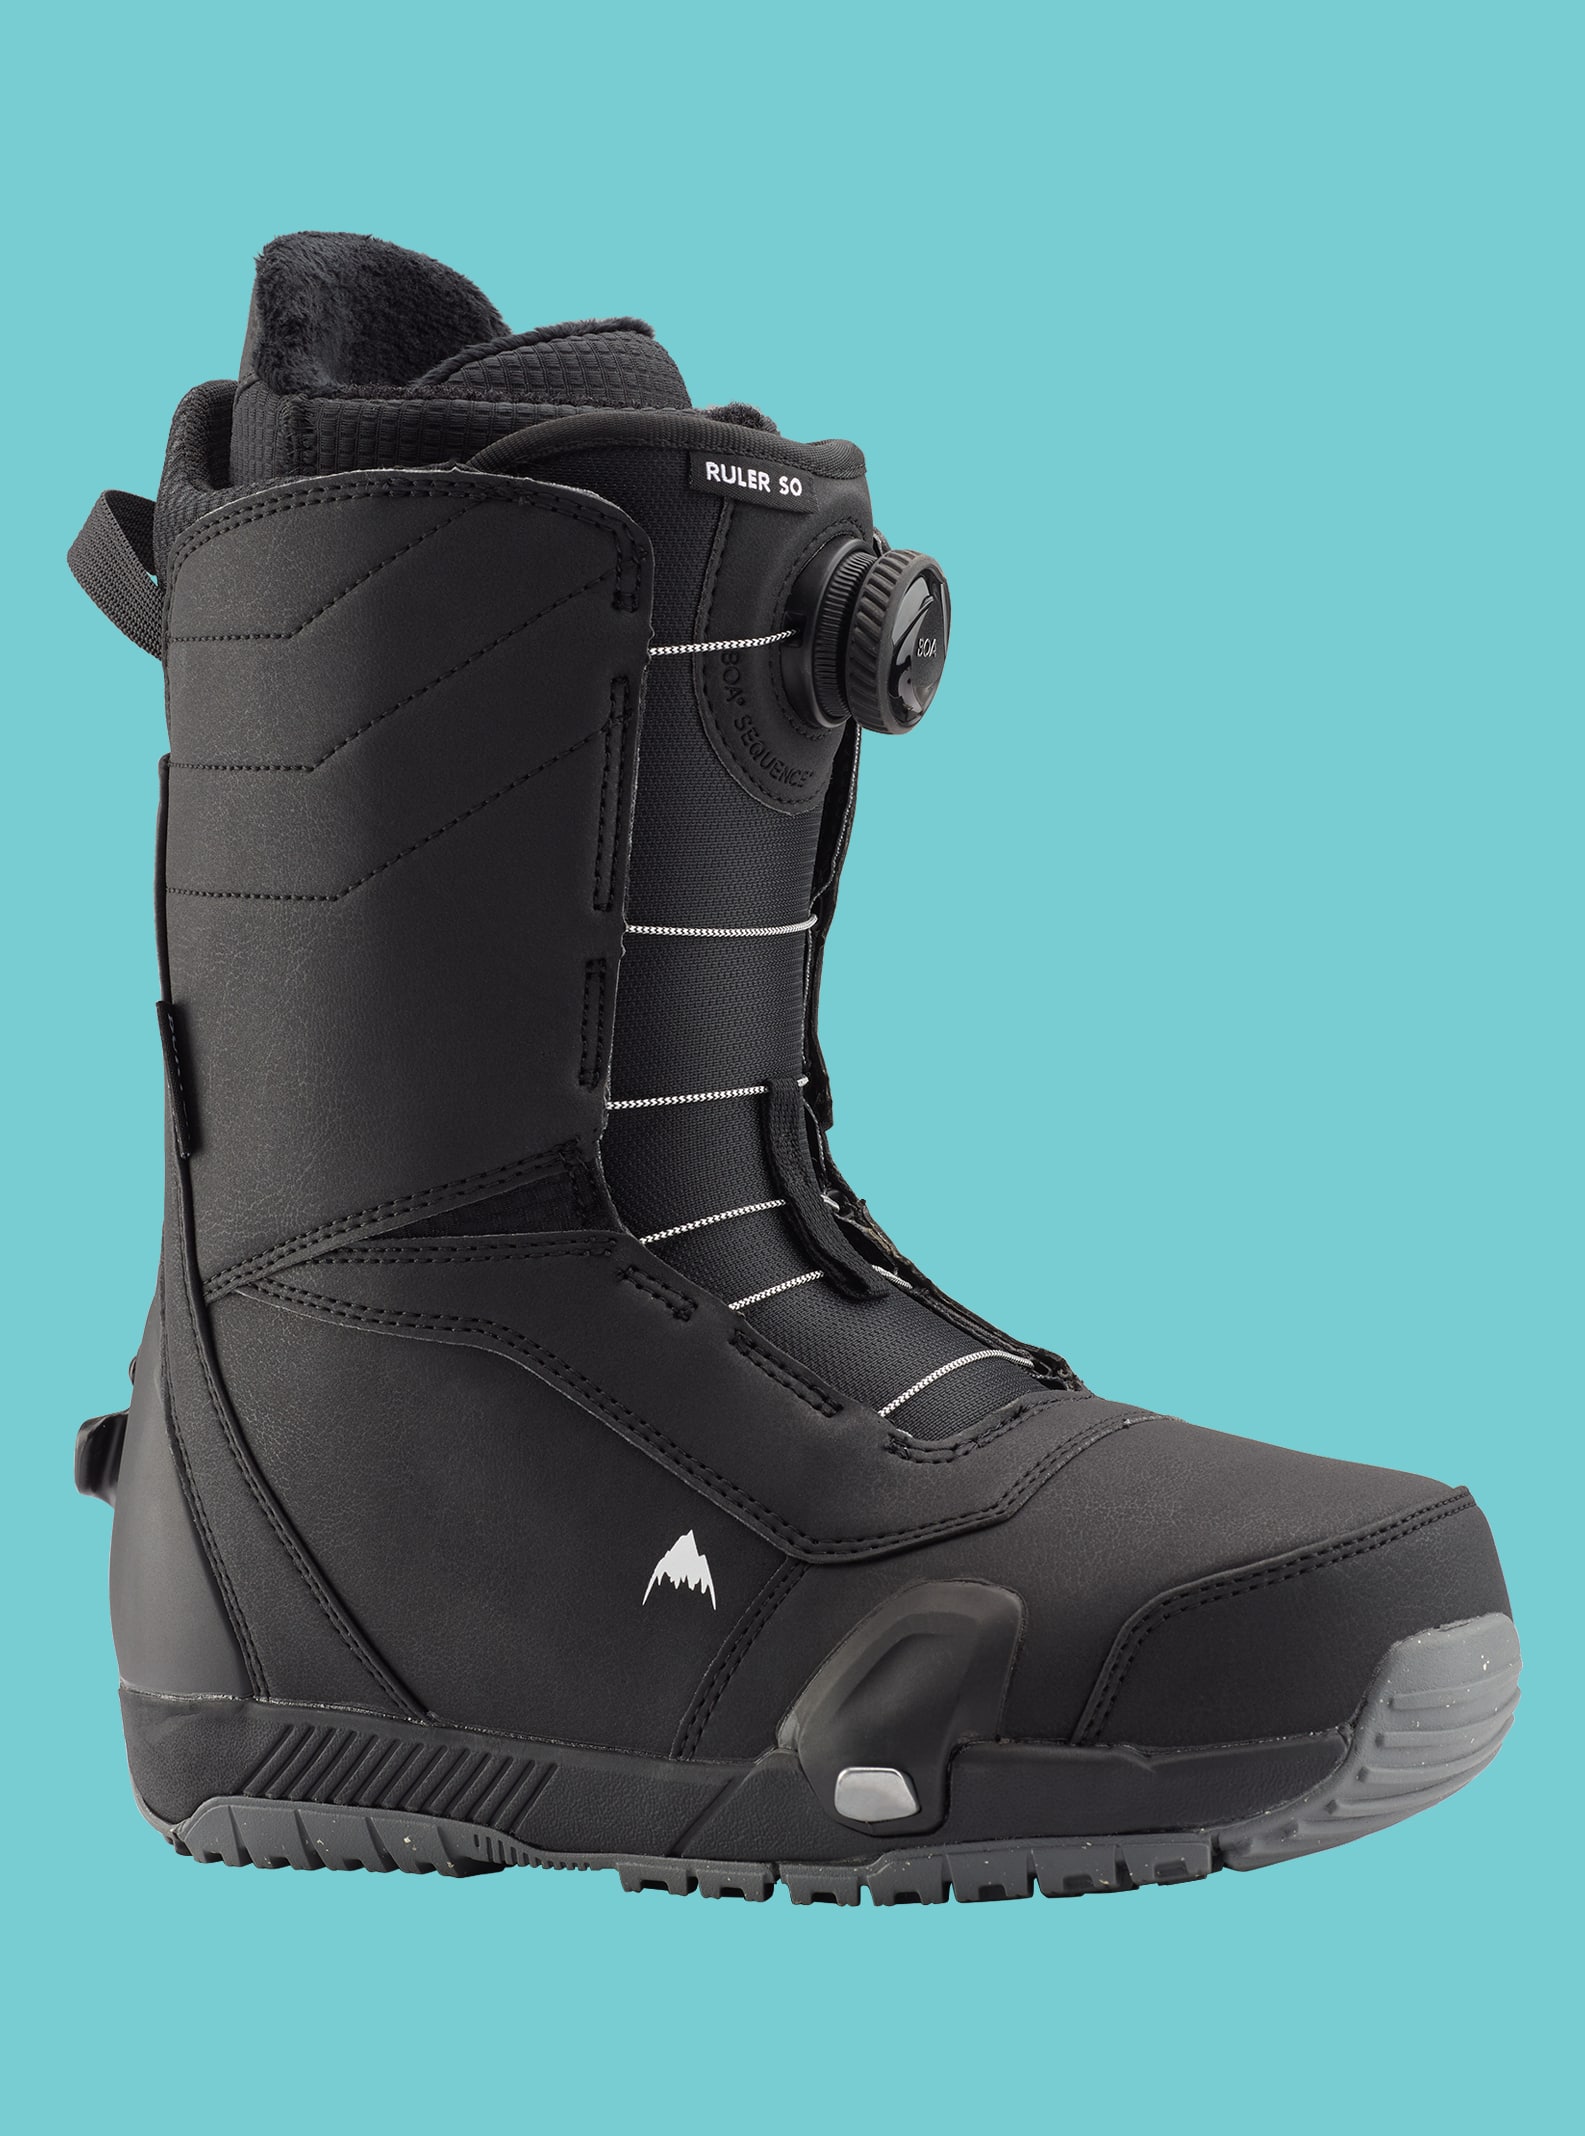 Buy > burton step in snowboard boots > in stock